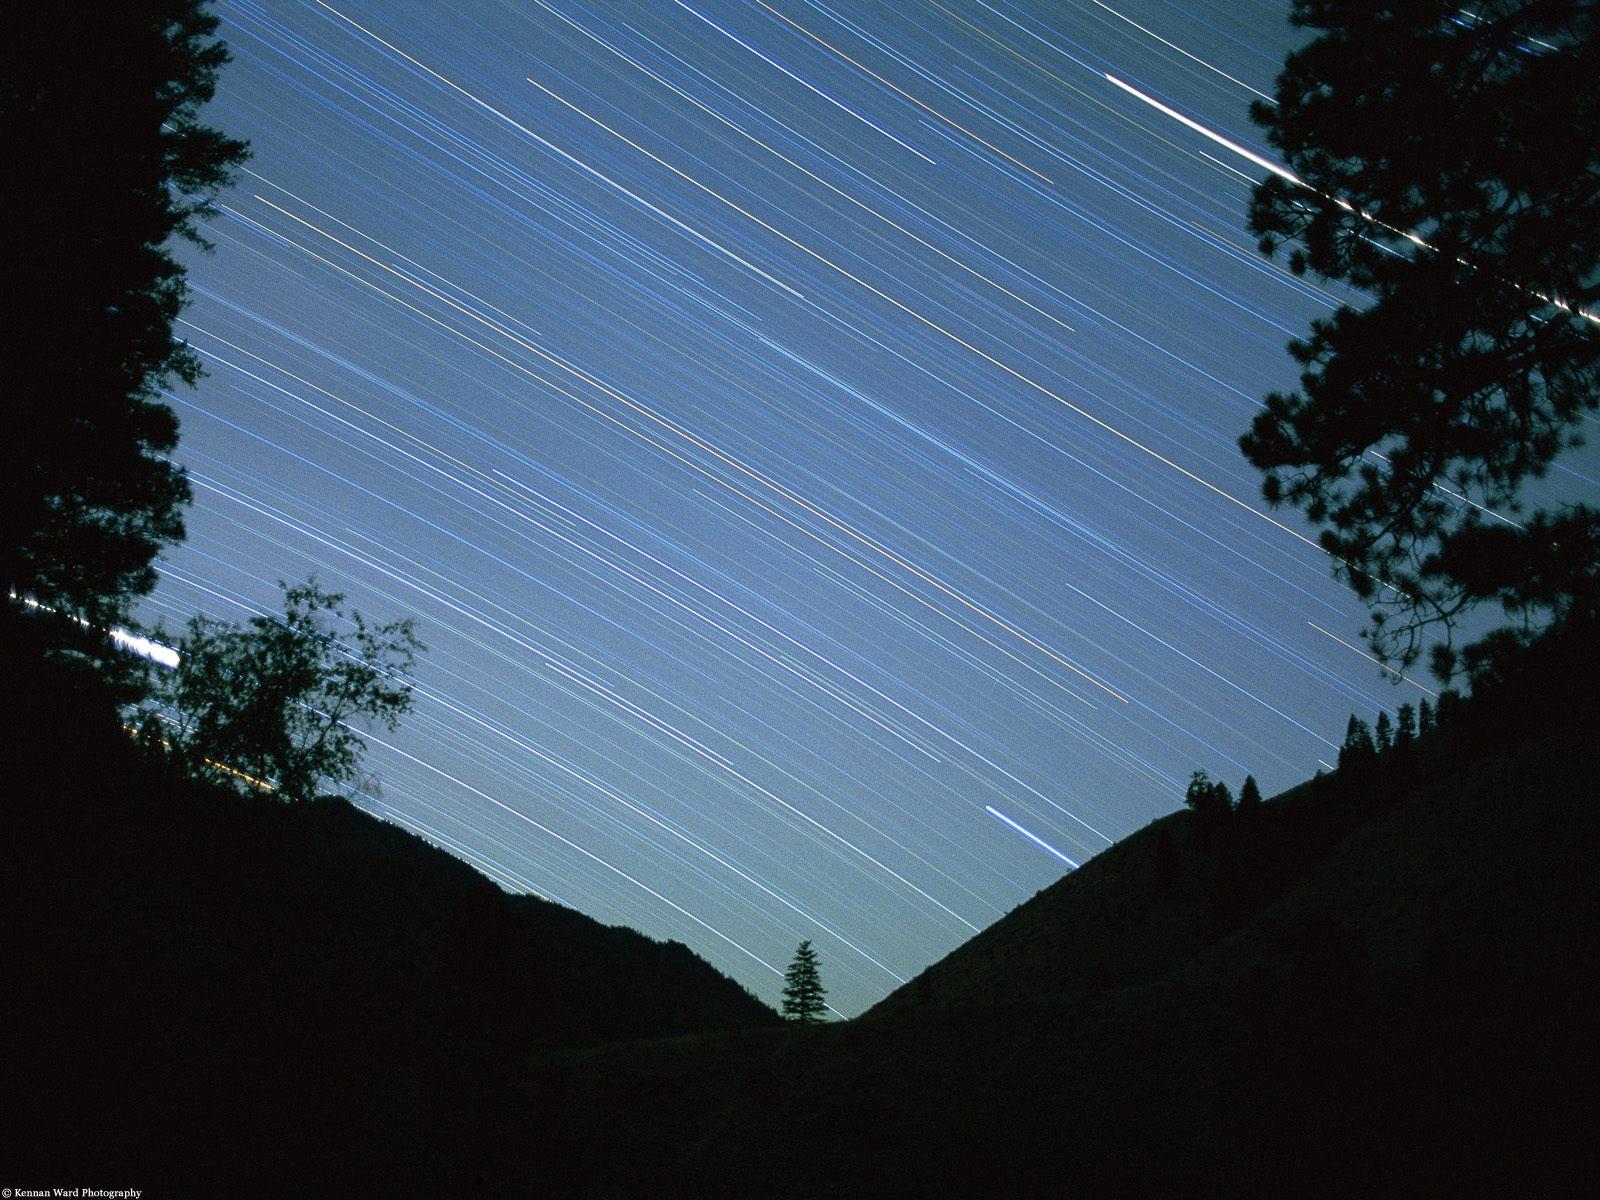 Shooting stars on sky free desktop background wallpaper image